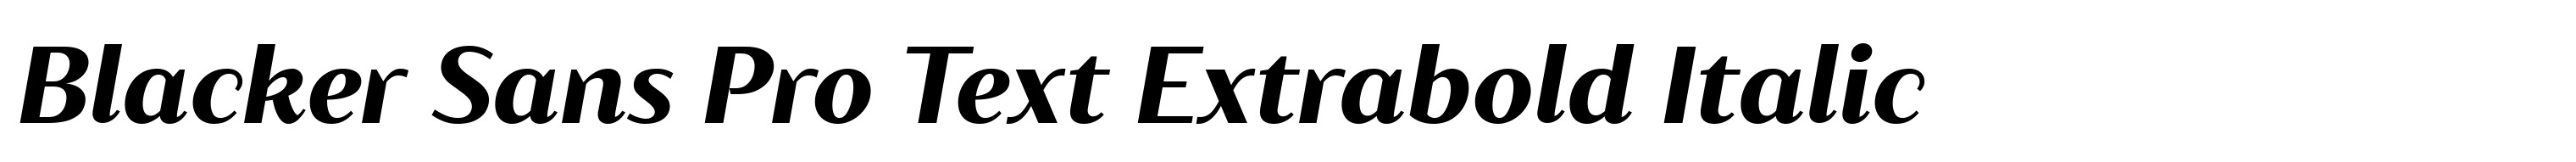 Blacker Sans Pro Text Extrabold Italic